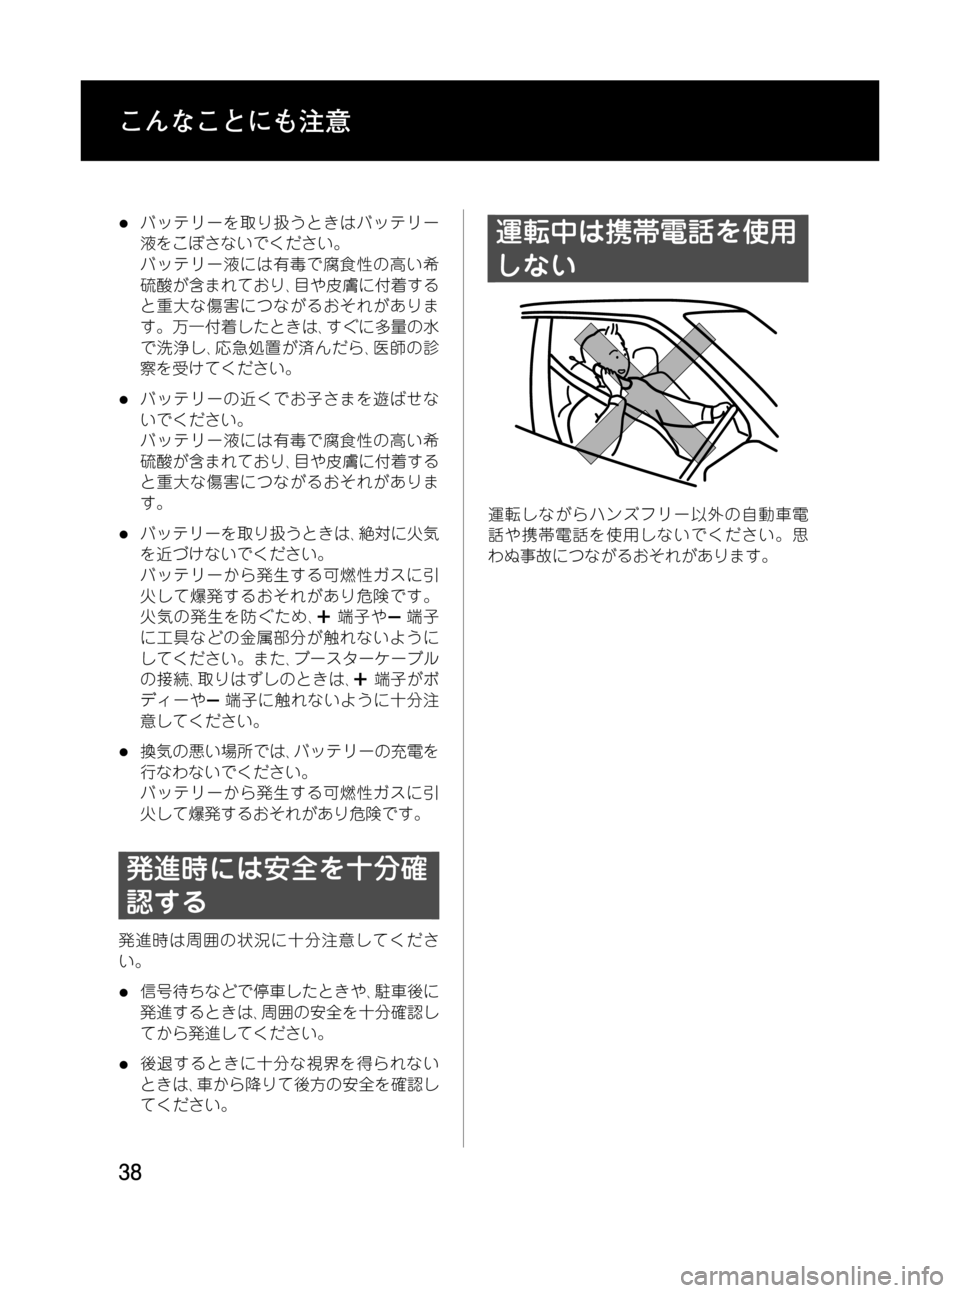 MAZDA MODEL RX 8 2008  取扱説明書 (in Japanese) Black plate (38,1)
lバッテリーを取り扱うときはバッテリー
液をこぼさないでください。
バッテリー液には有毒で腐食性の高い希
硫酸が含まれており､